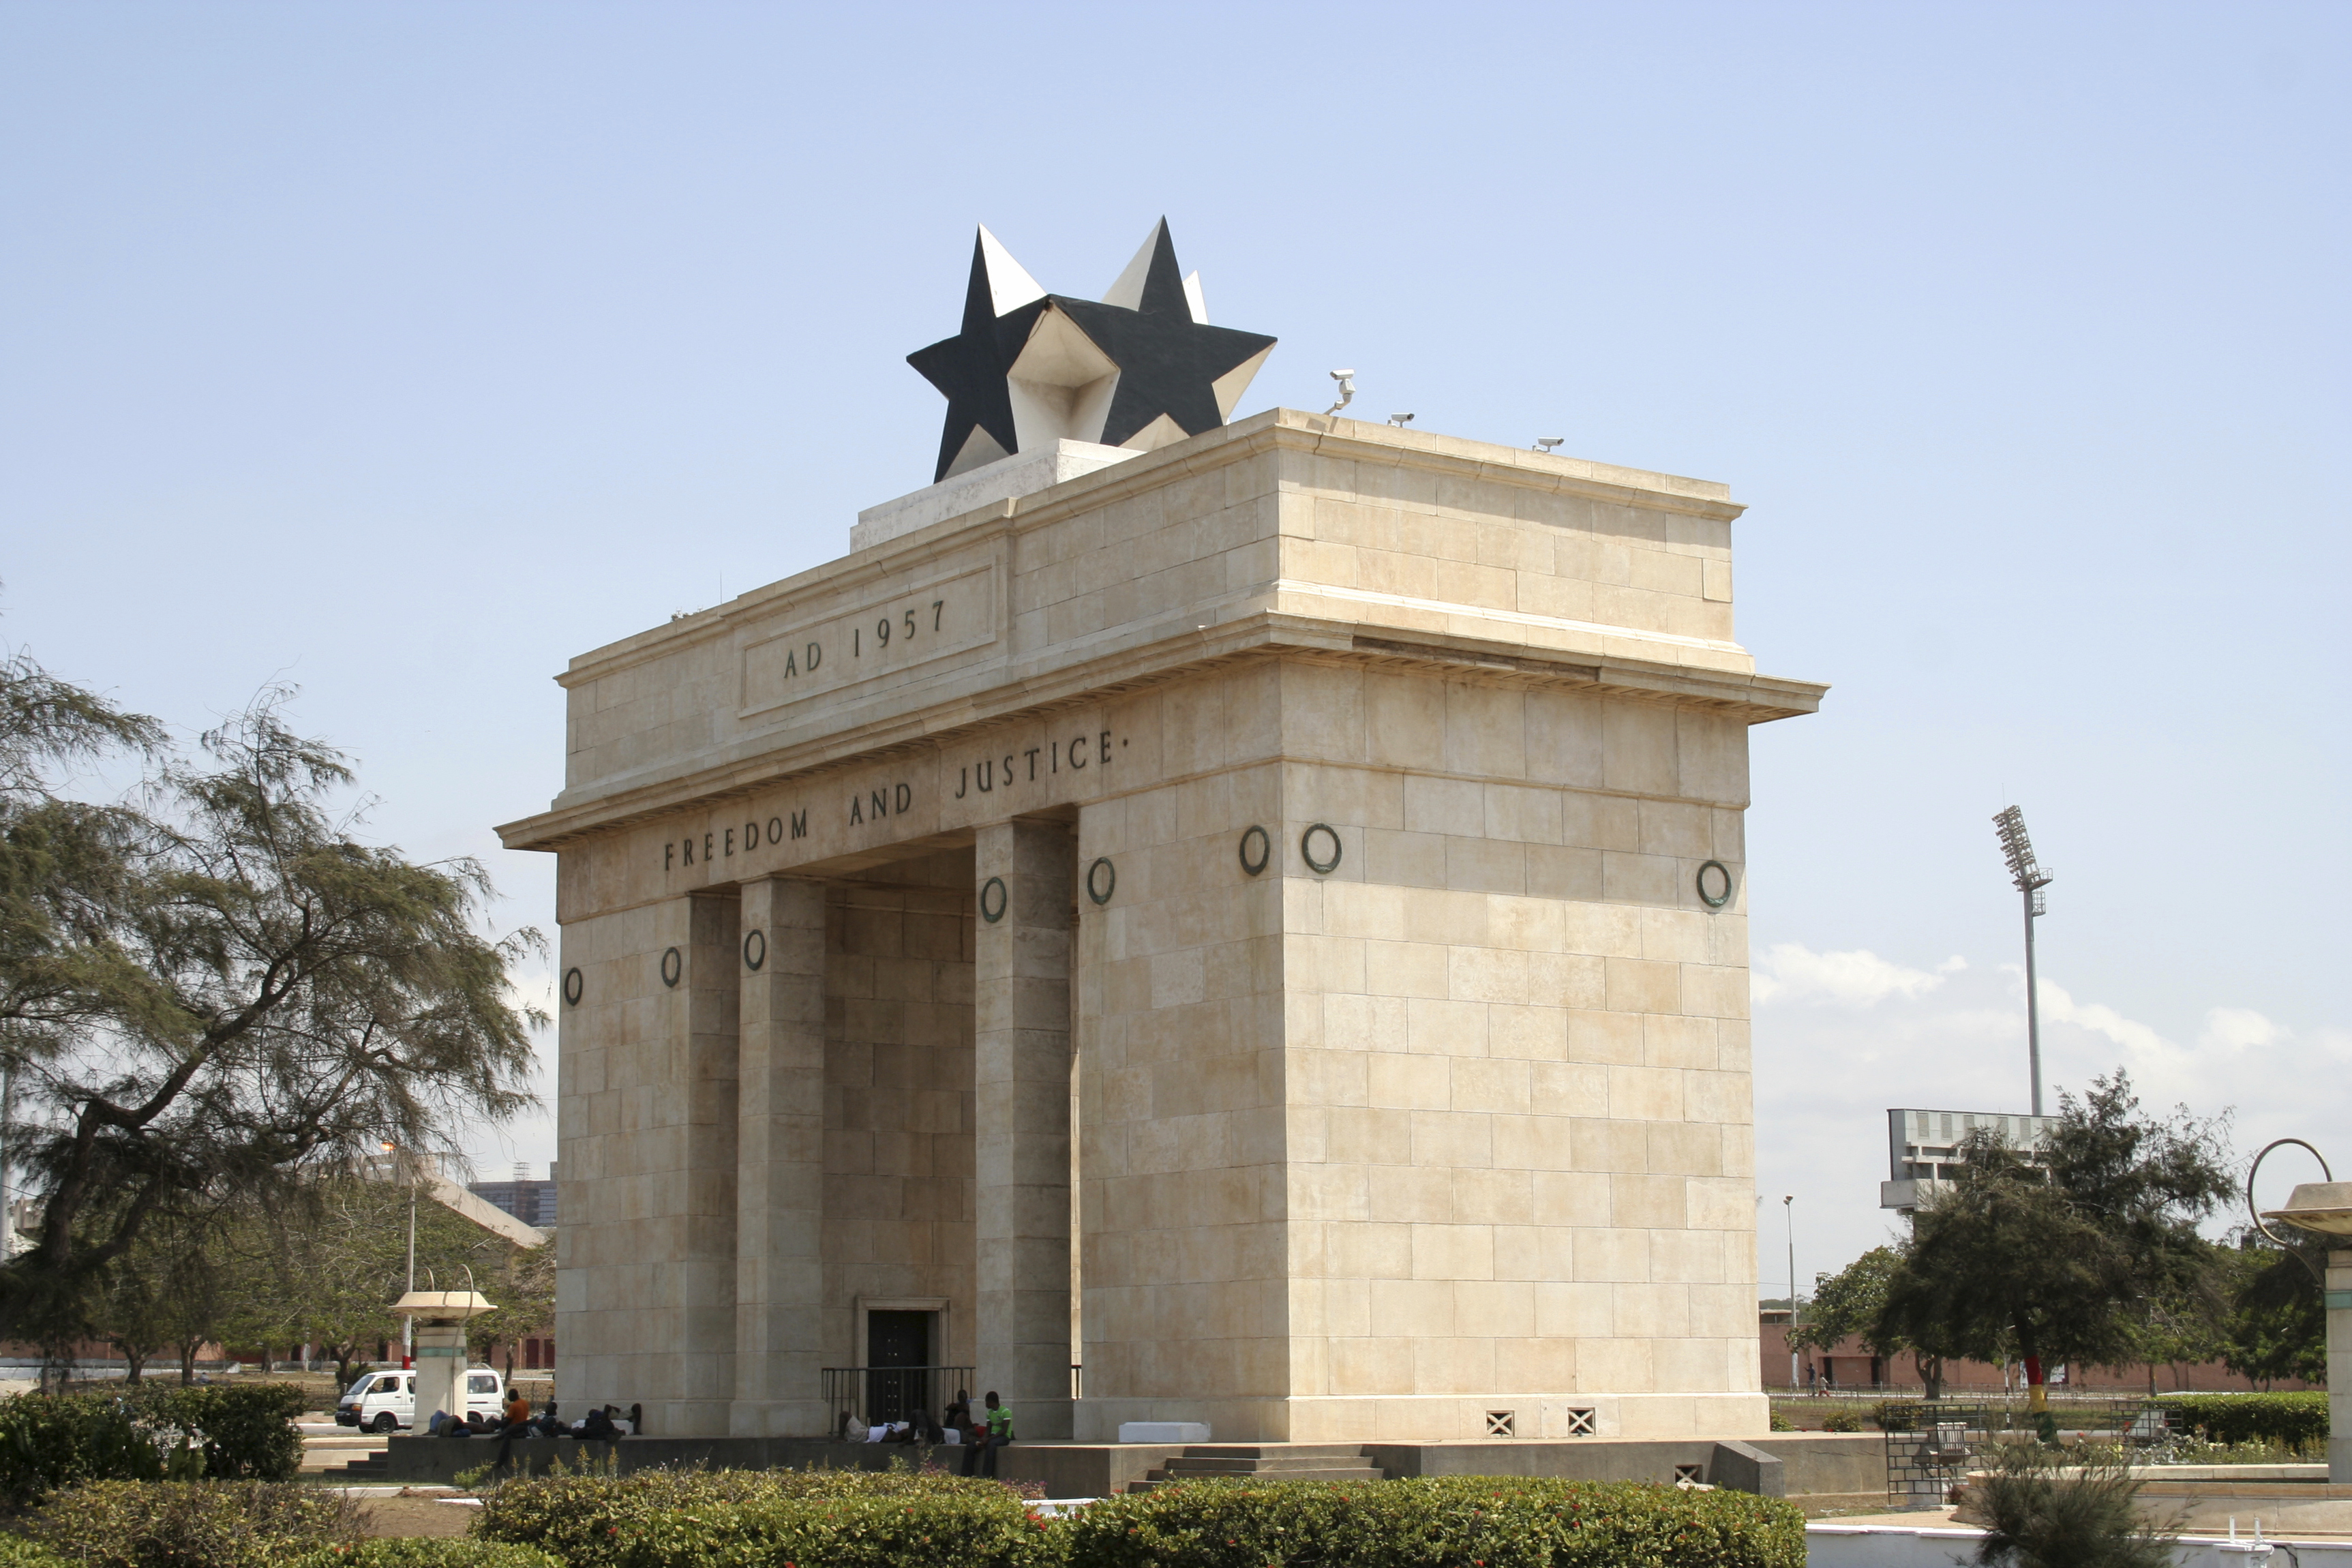 Black Star Square, Ghana